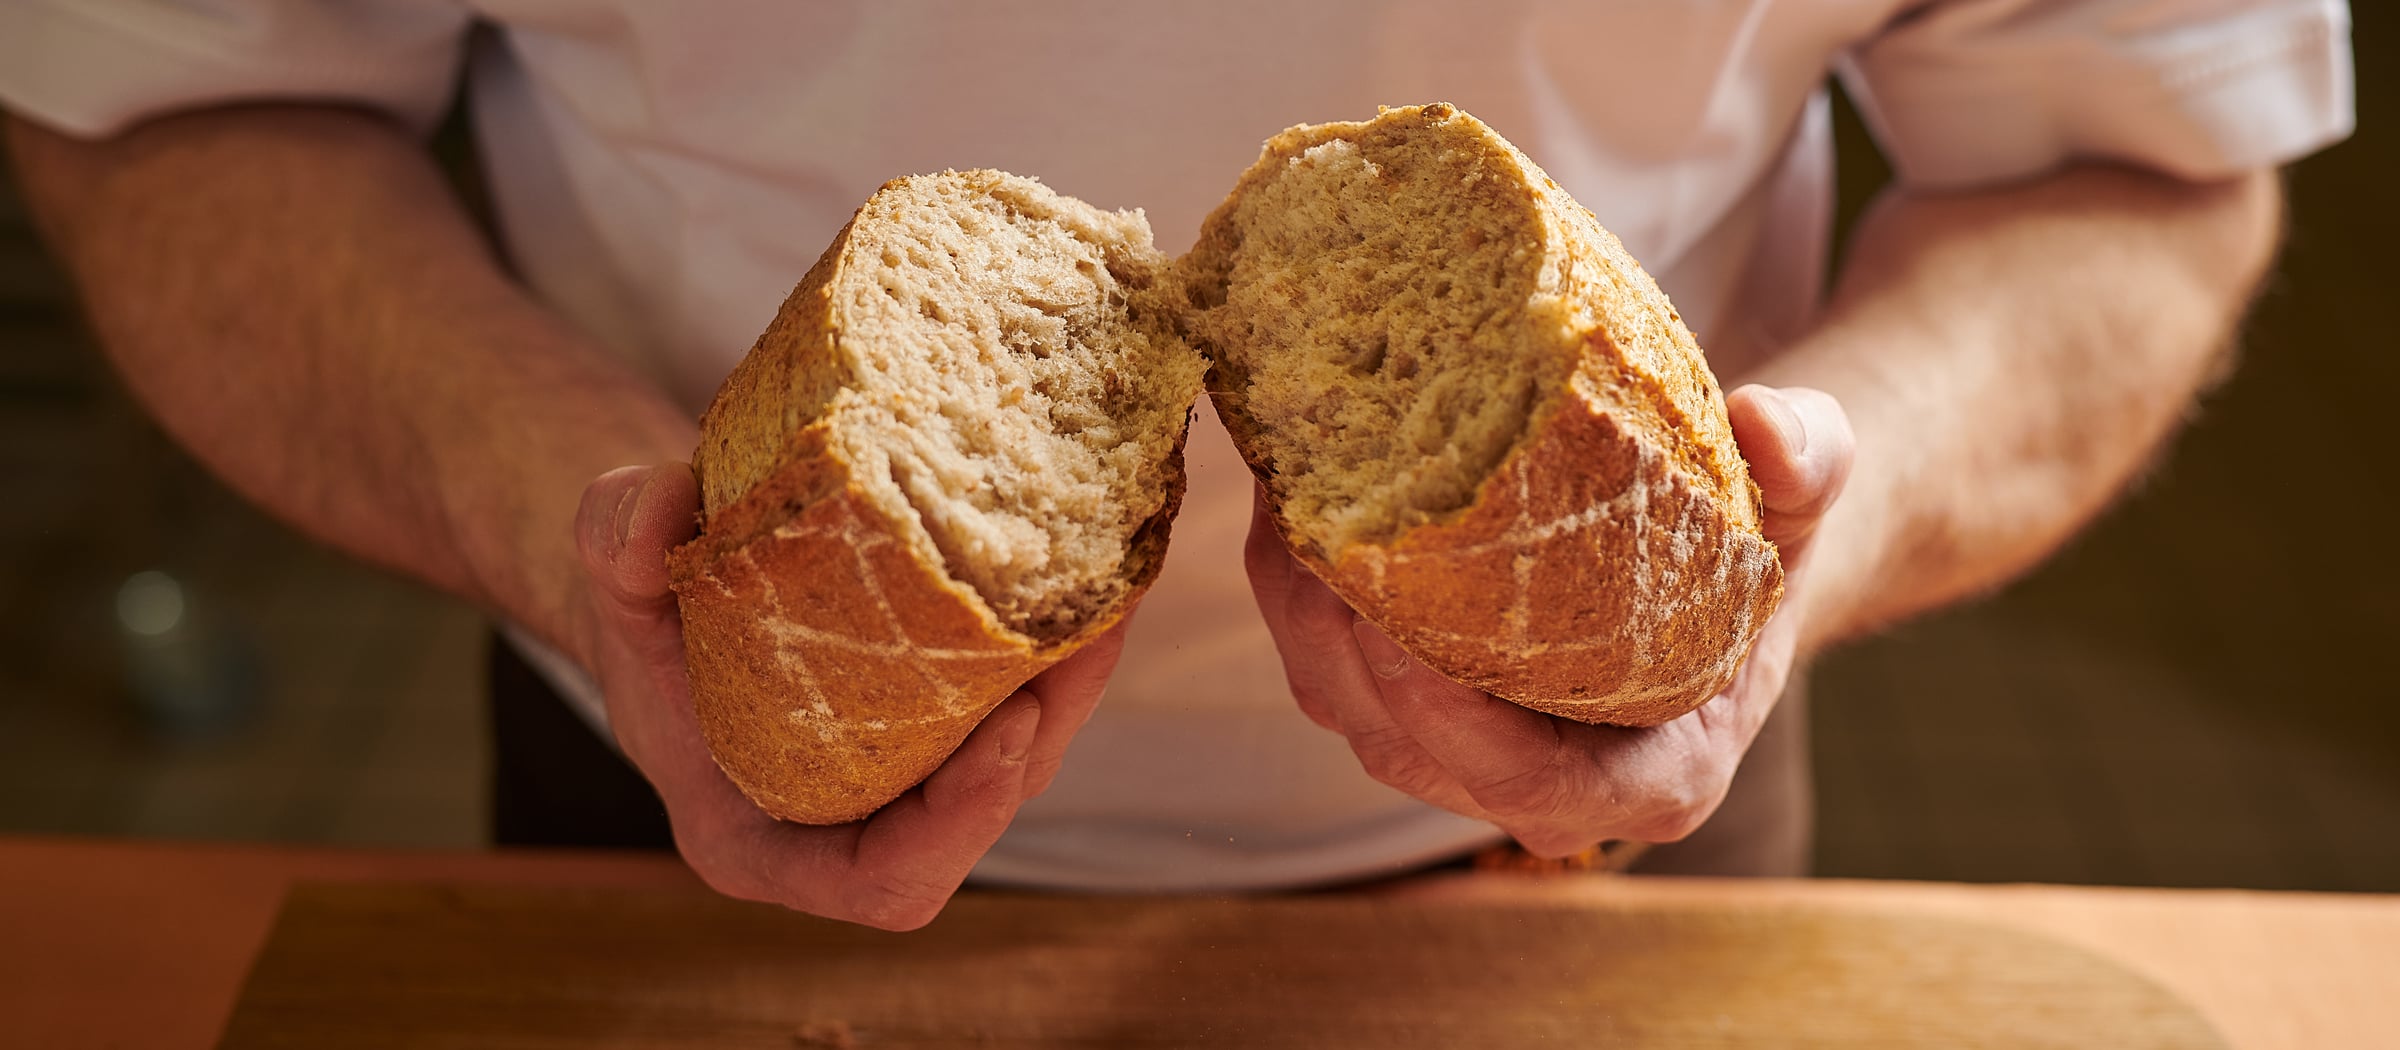 Bäcker zeigt in zwei Hälften geschnittenes Brot